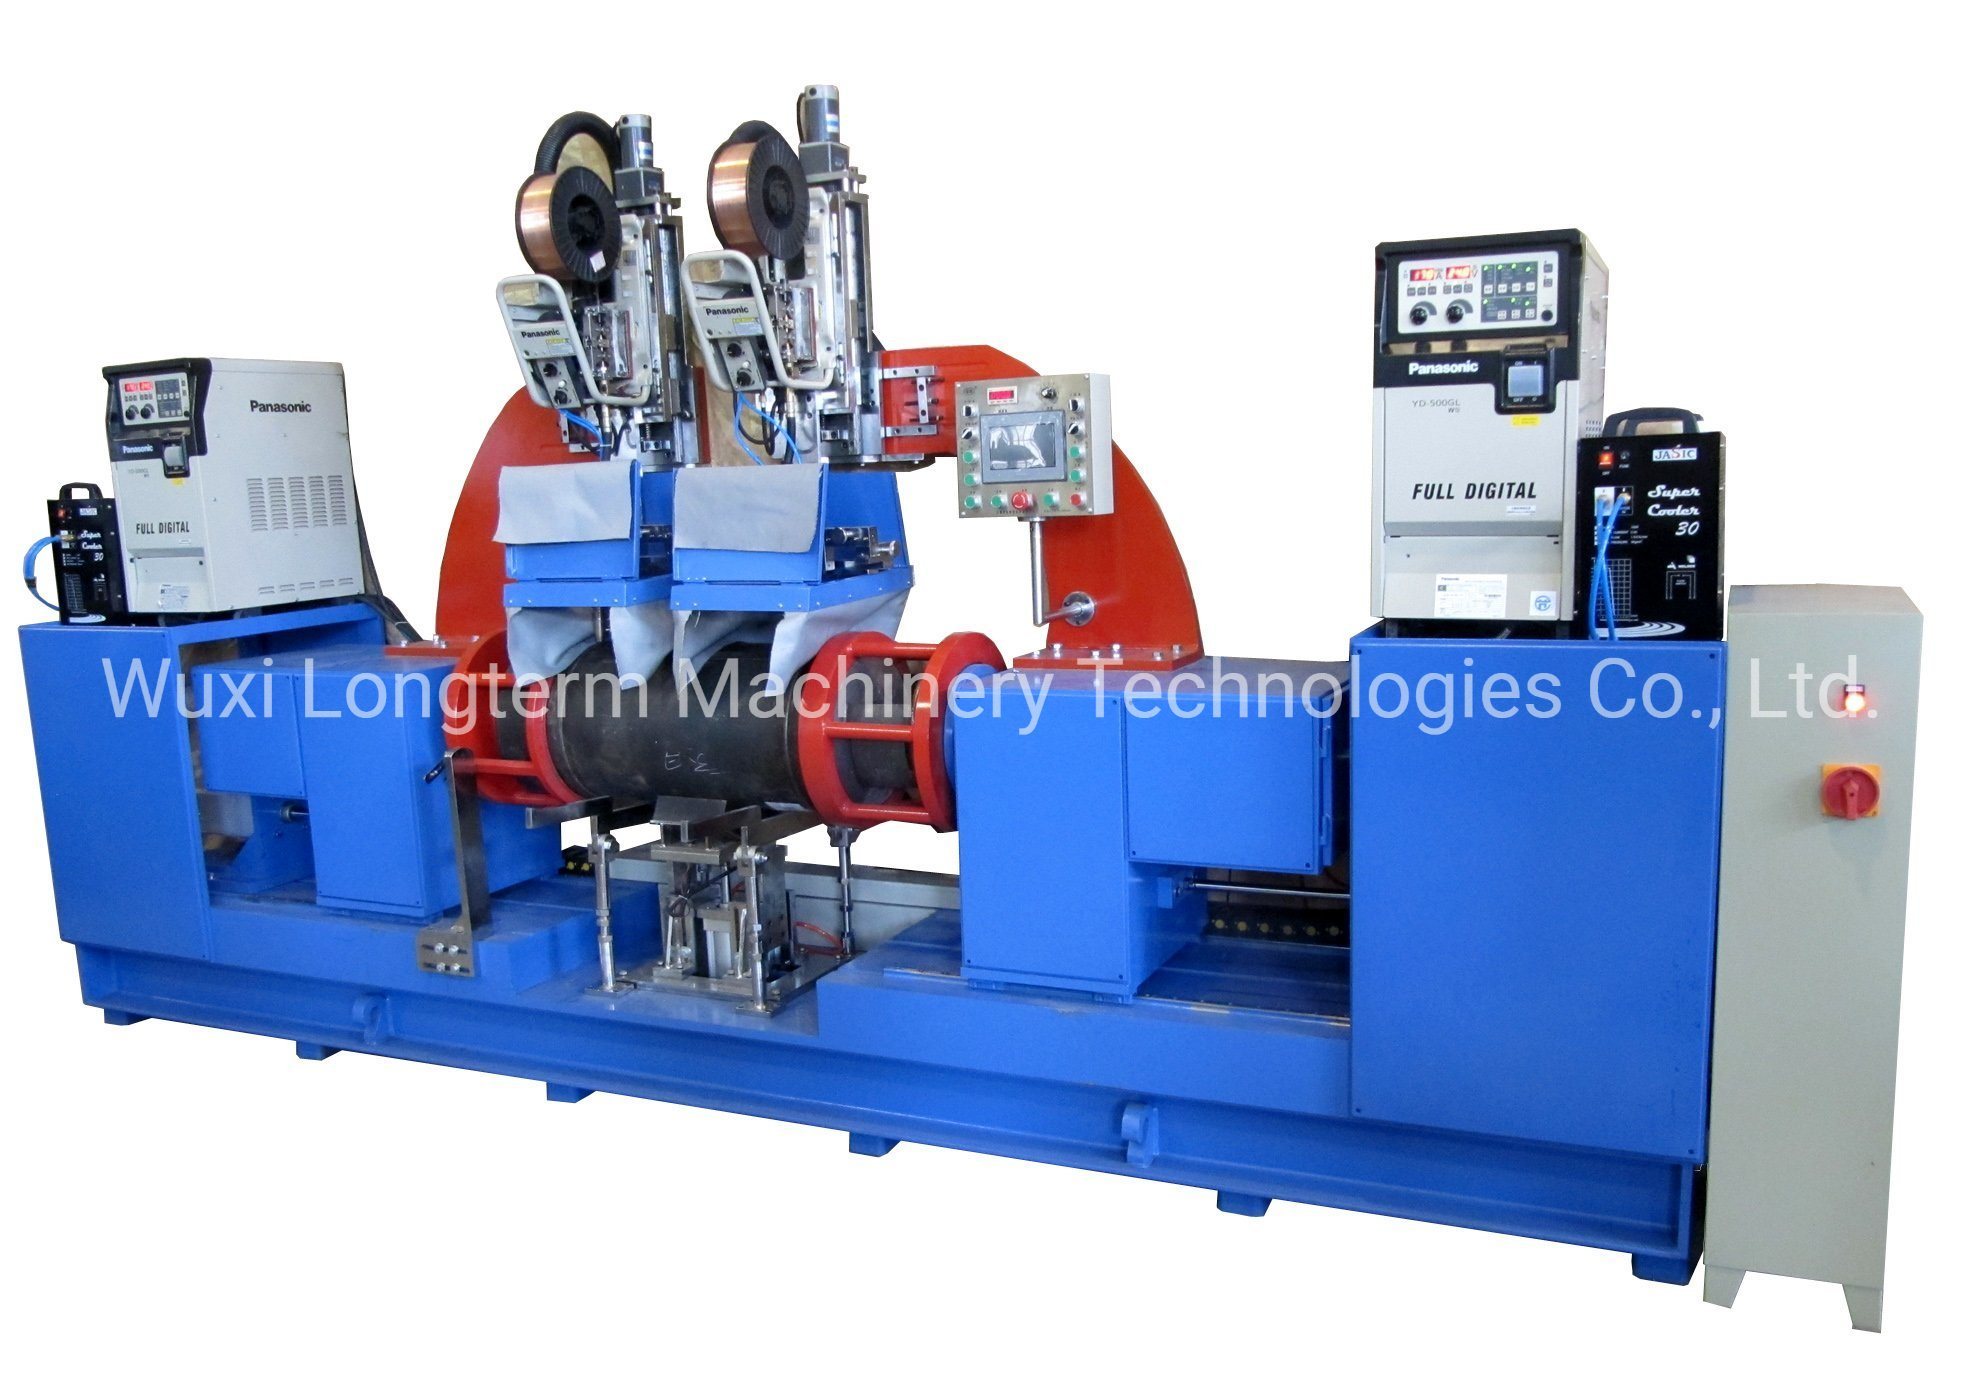 LPG Gas Cylinder MIG Welding Machine for Manufacture Line